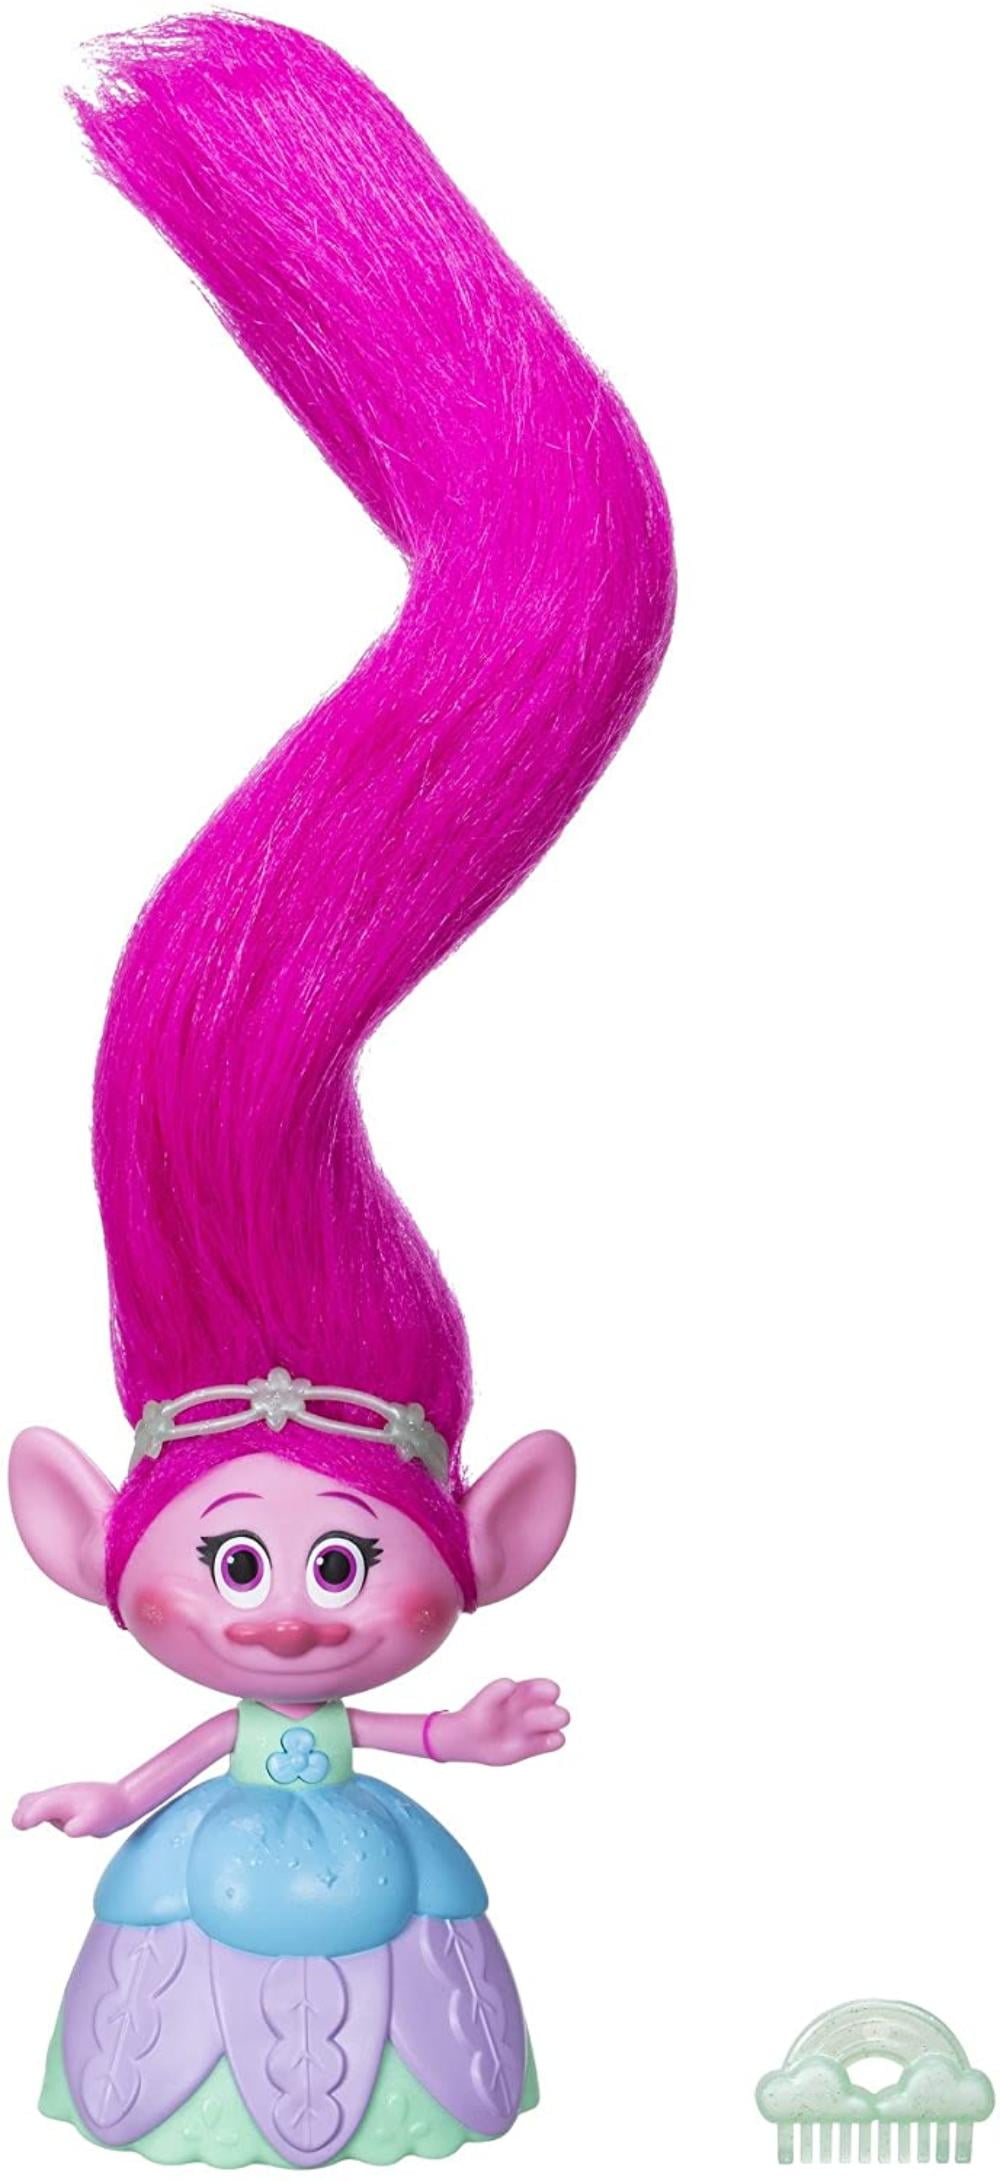 Trolls Dreamworks Hair in The Air Poppy C1305 for sale online 